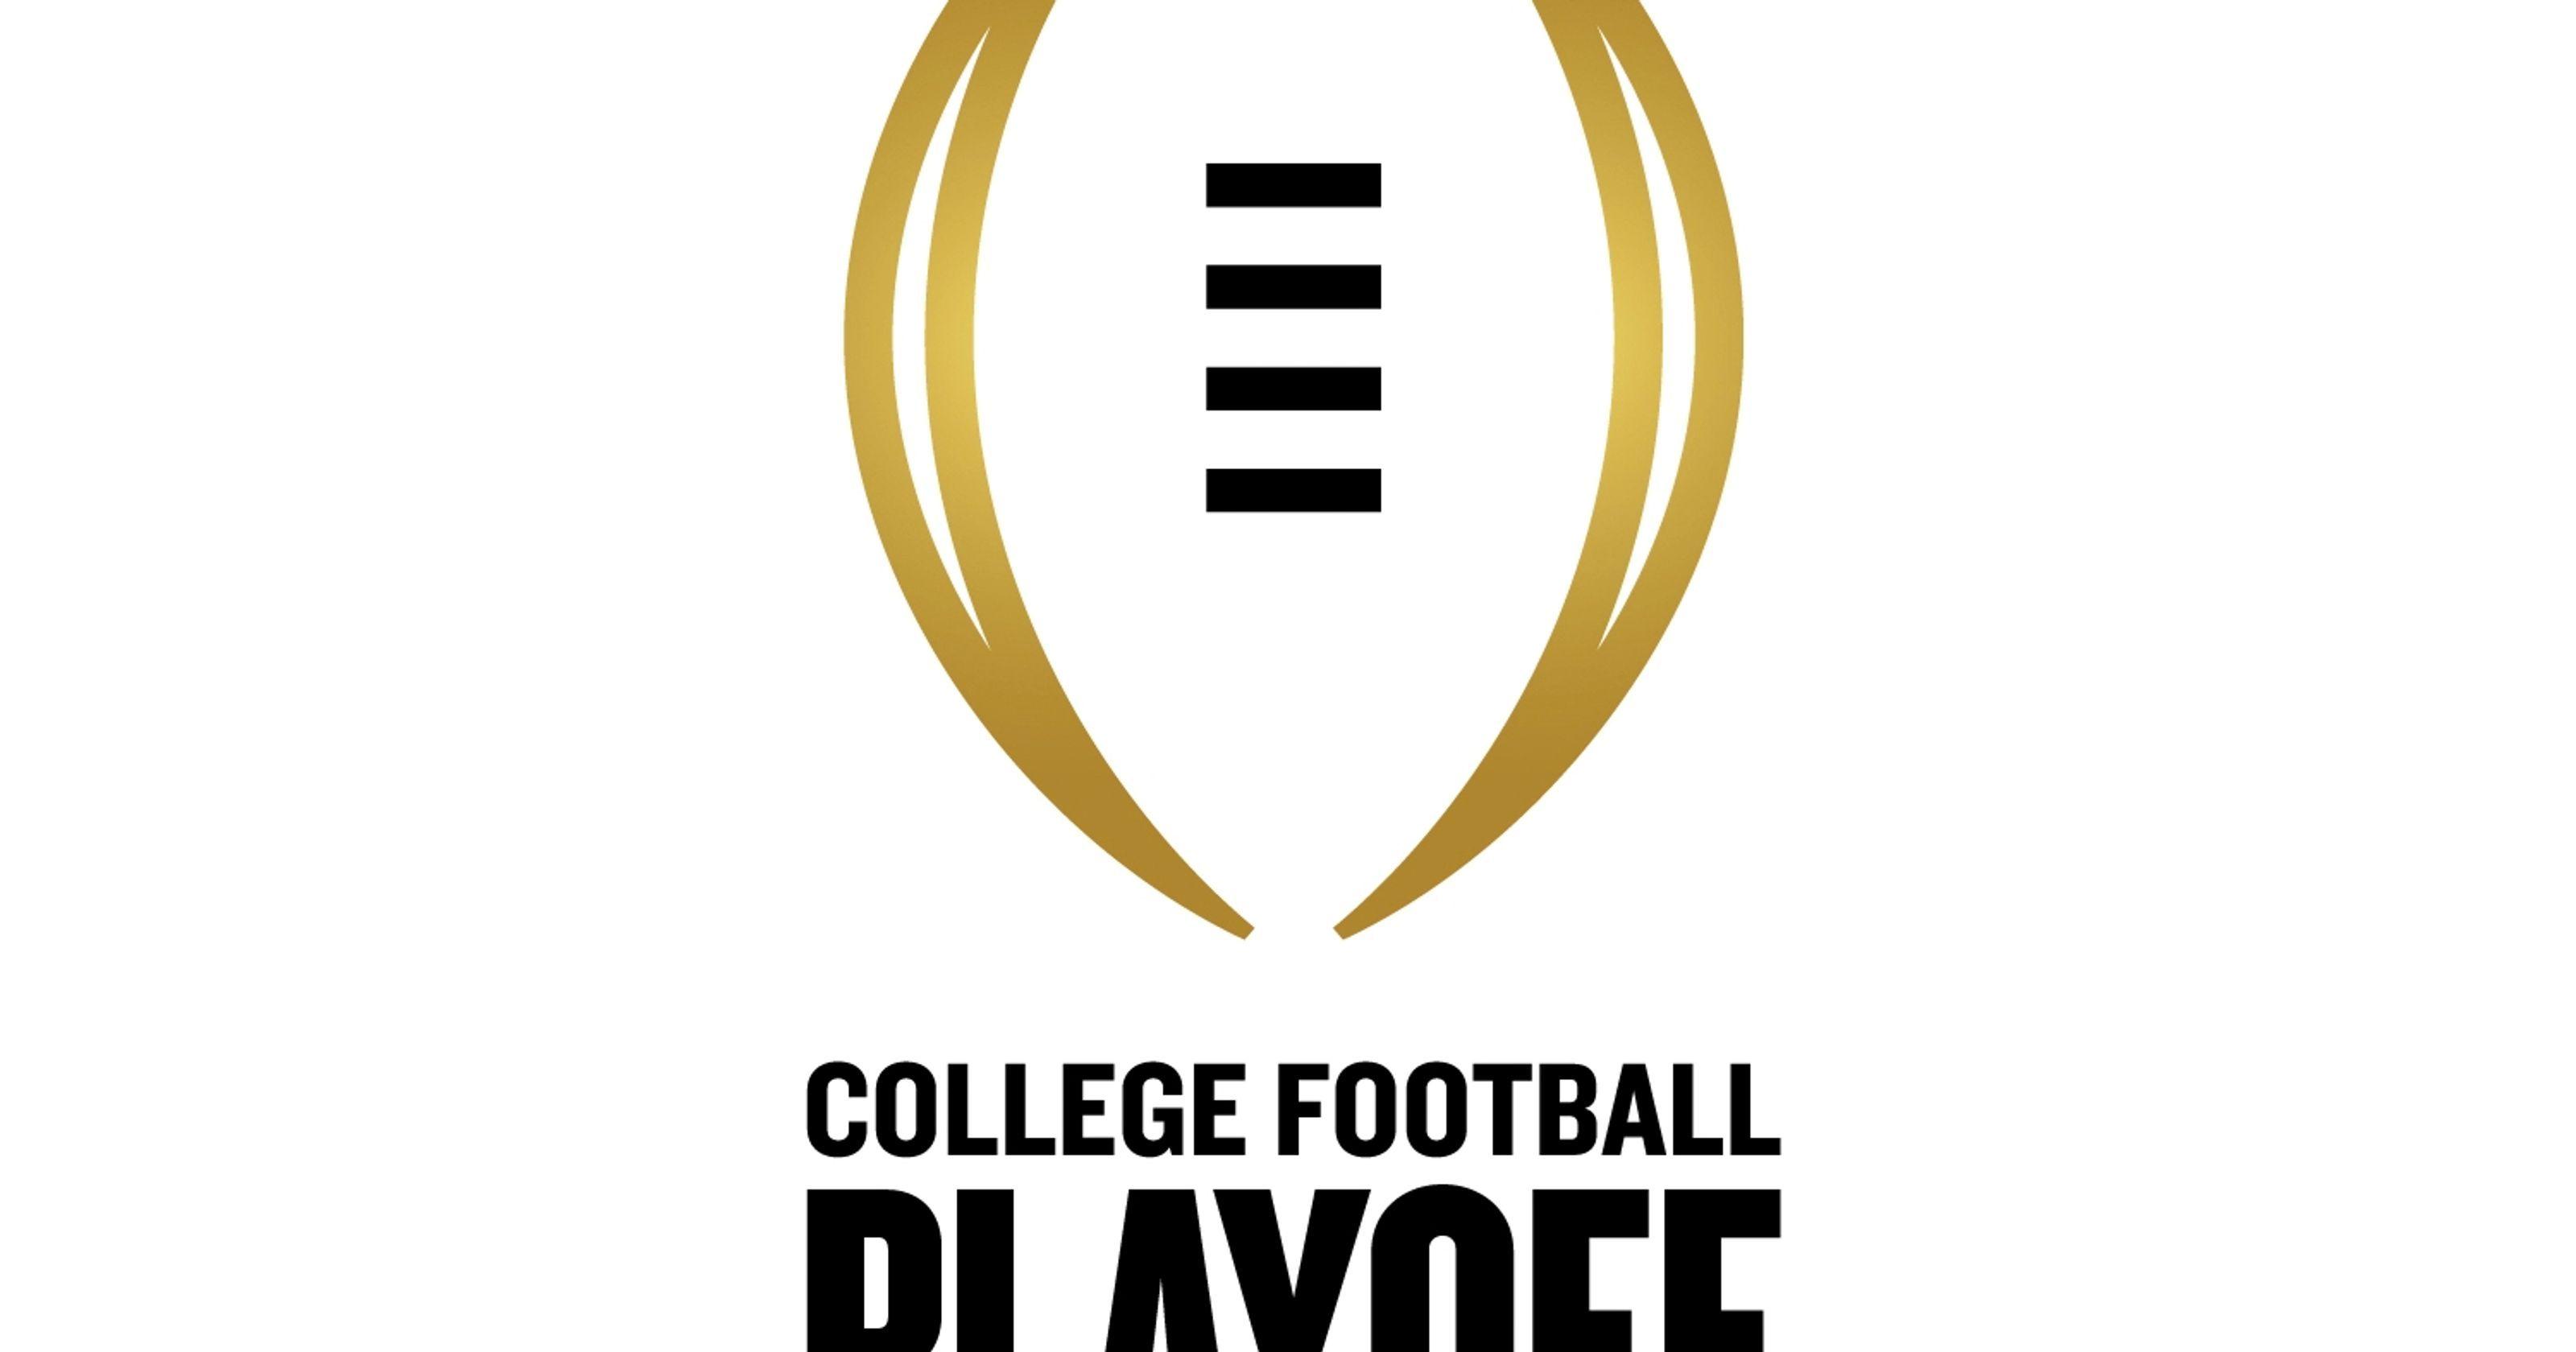 College Football Logo - College Football Playoff unveils logo winner